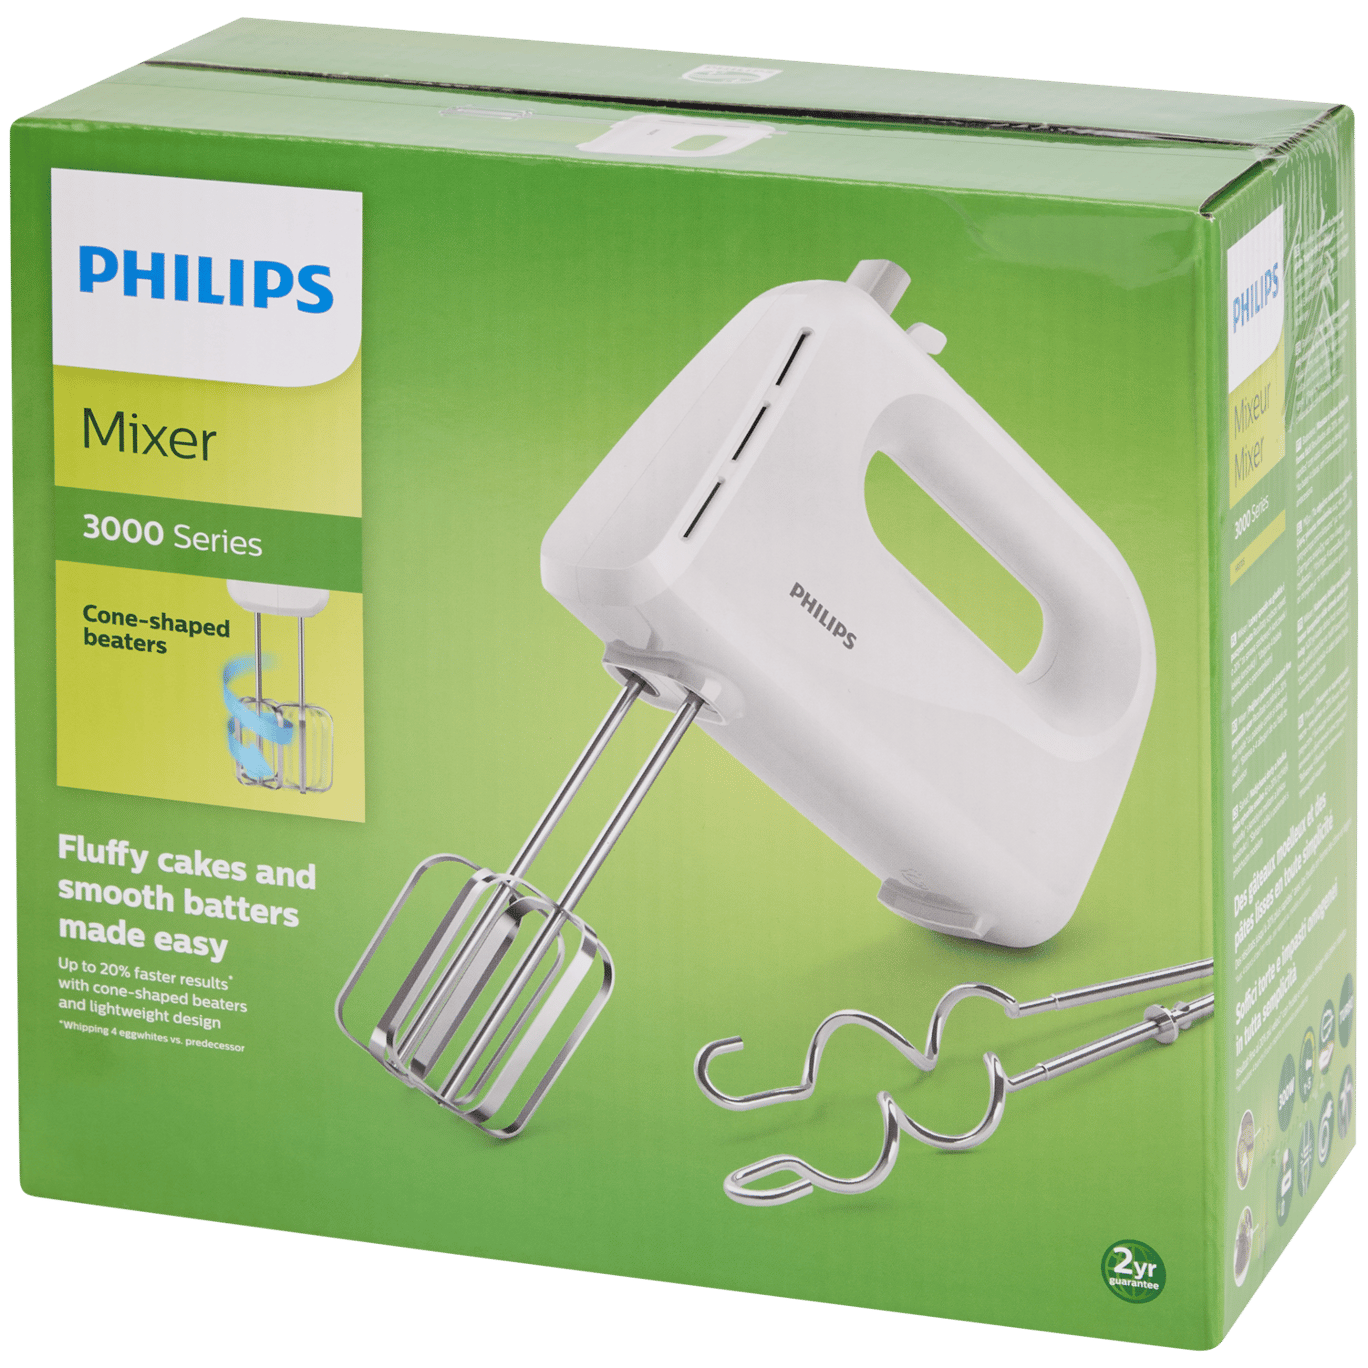 Philips handmixer 3000 series